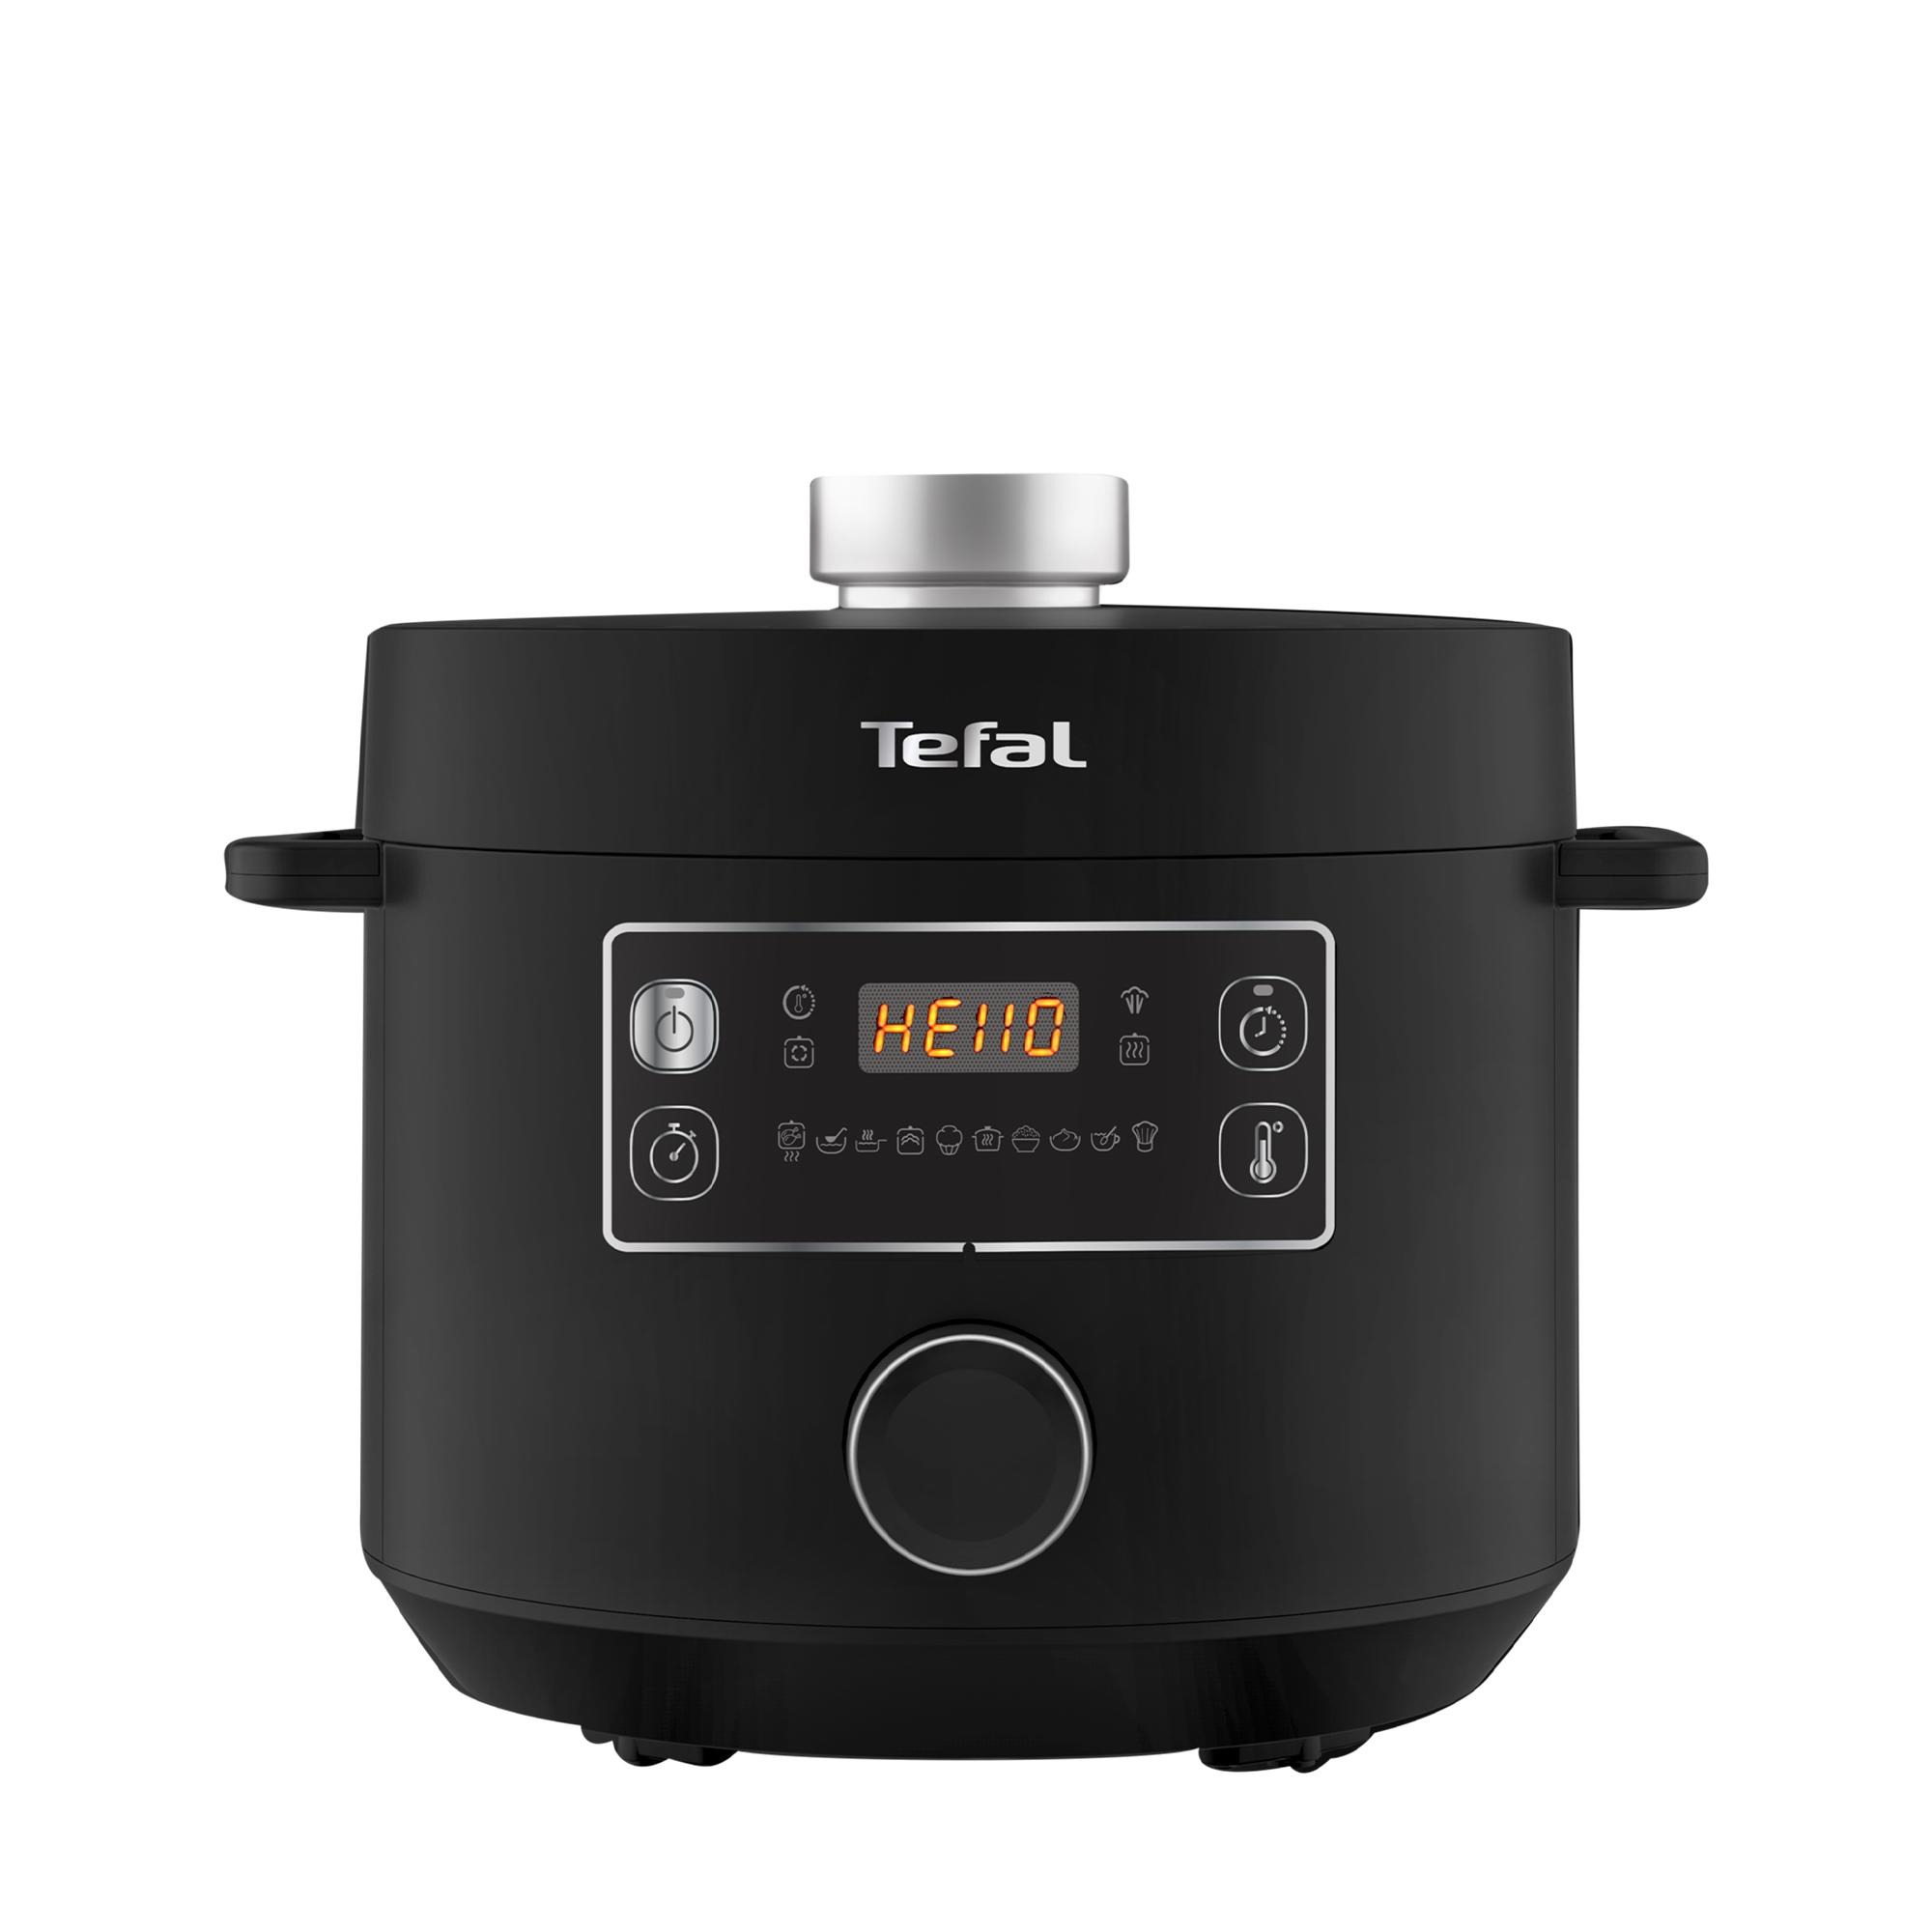 TEFAL Turbo Cuisine CY754840 Pressure Cooker - Black, Black